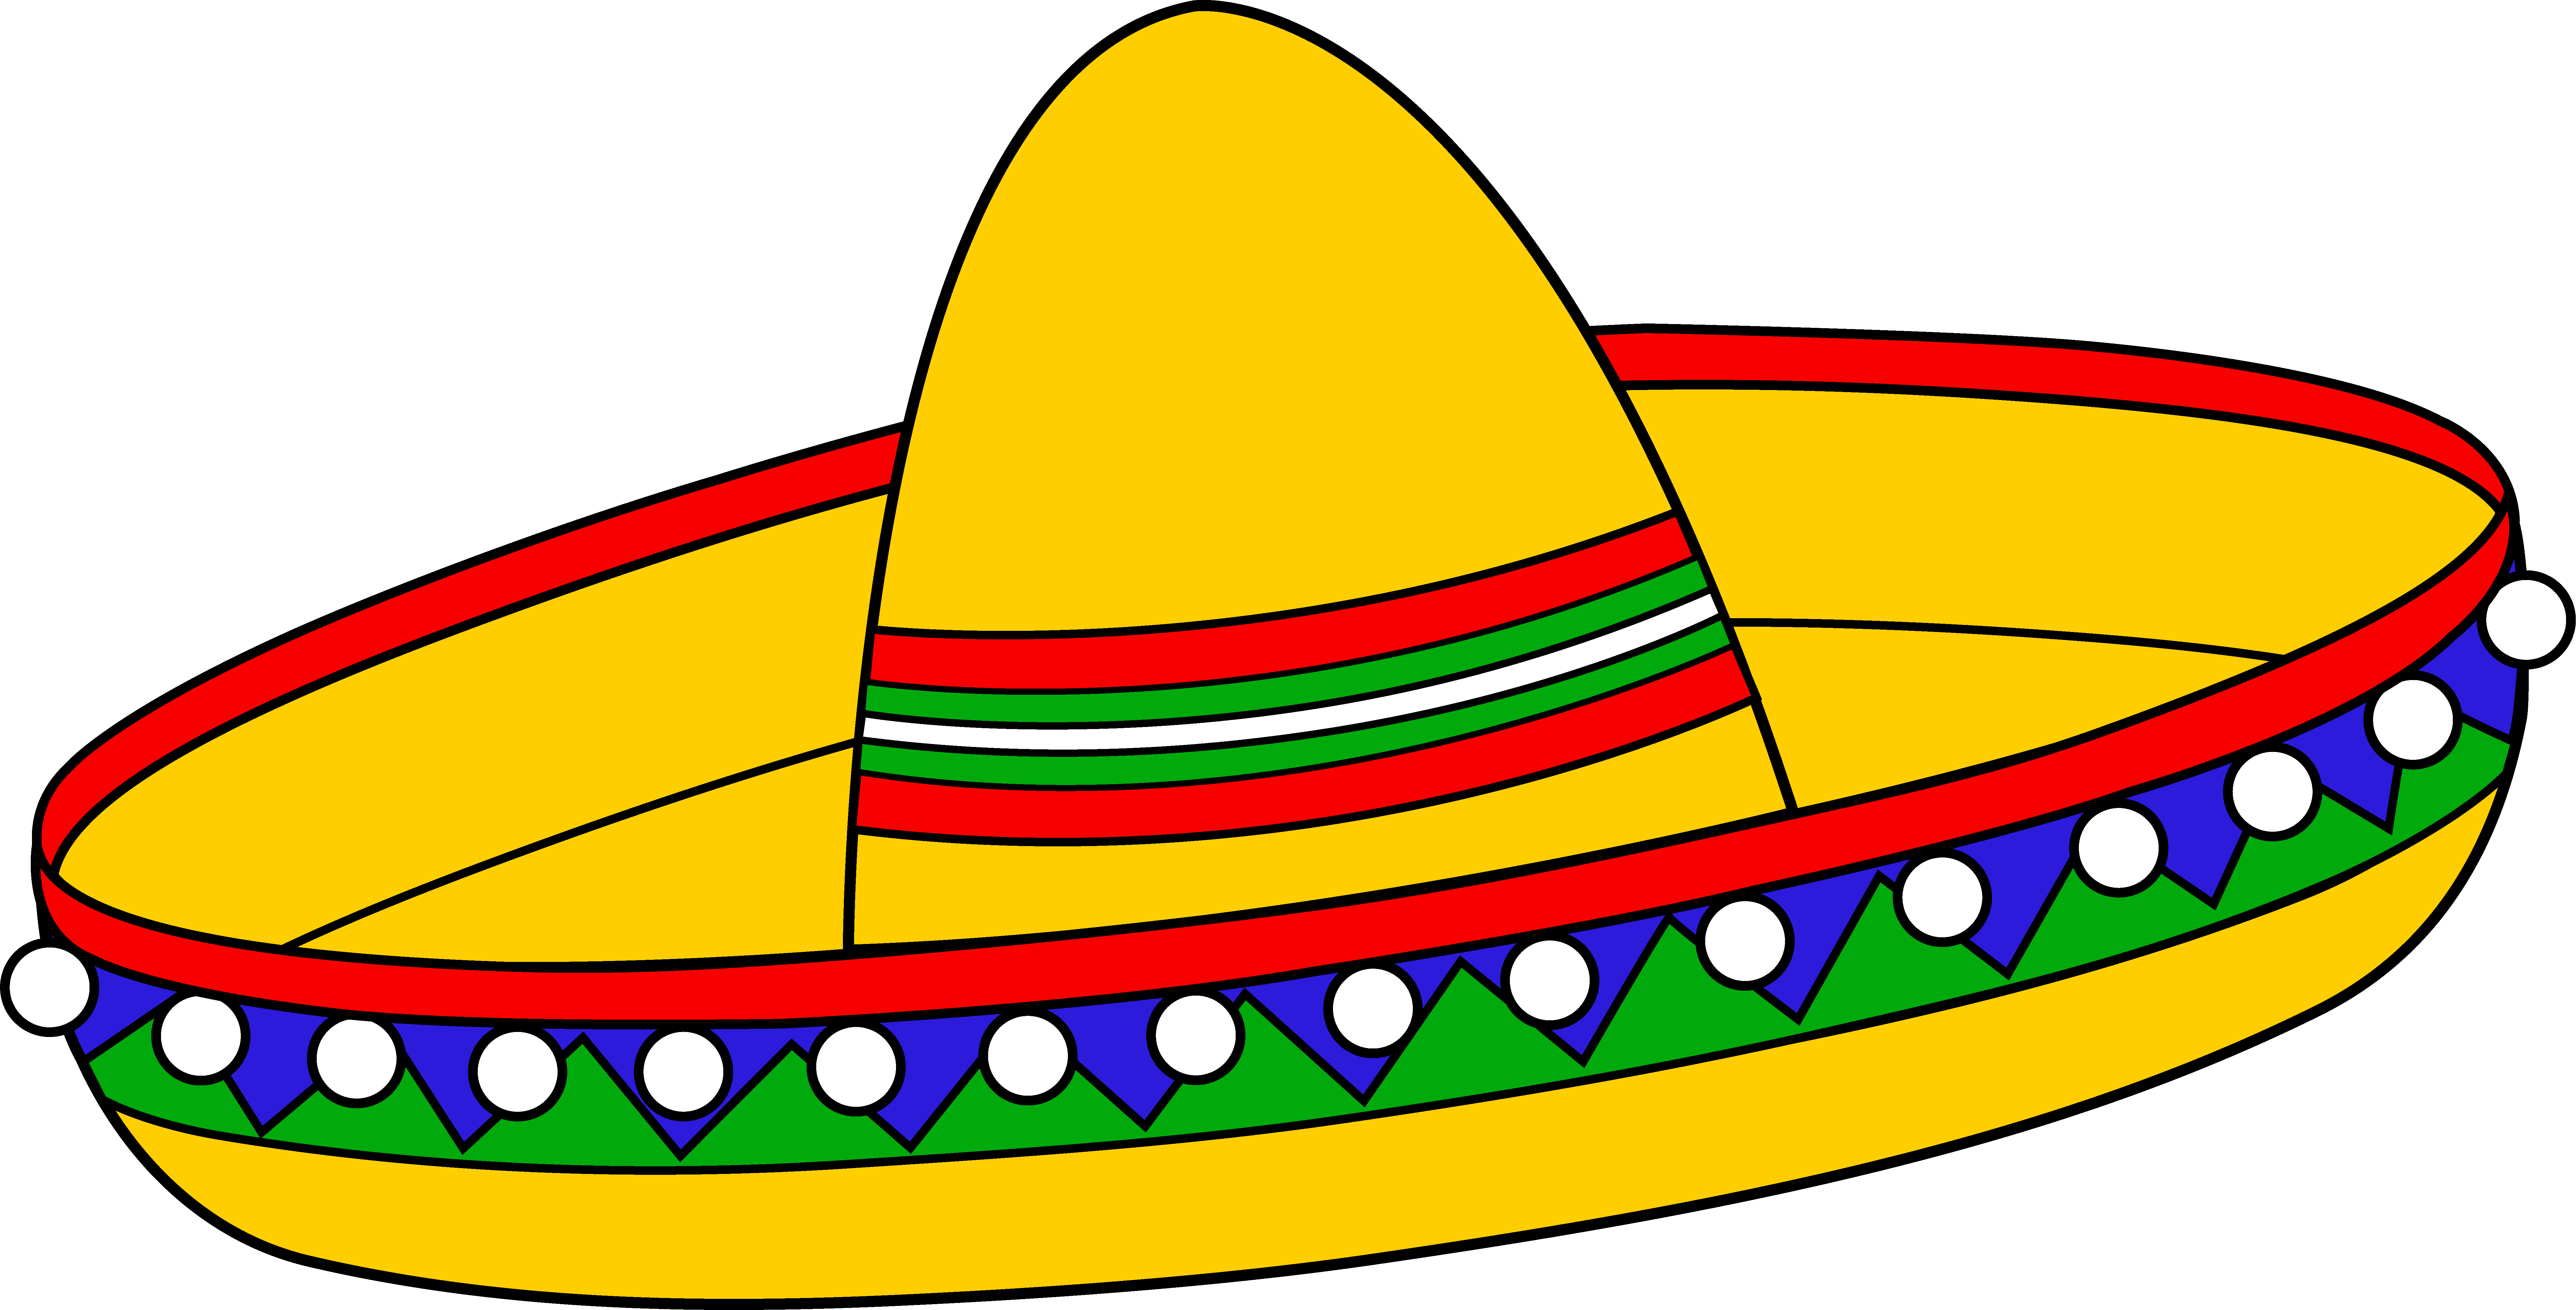 Colorful mexican sombrero hat. Clipart guitar fiesta